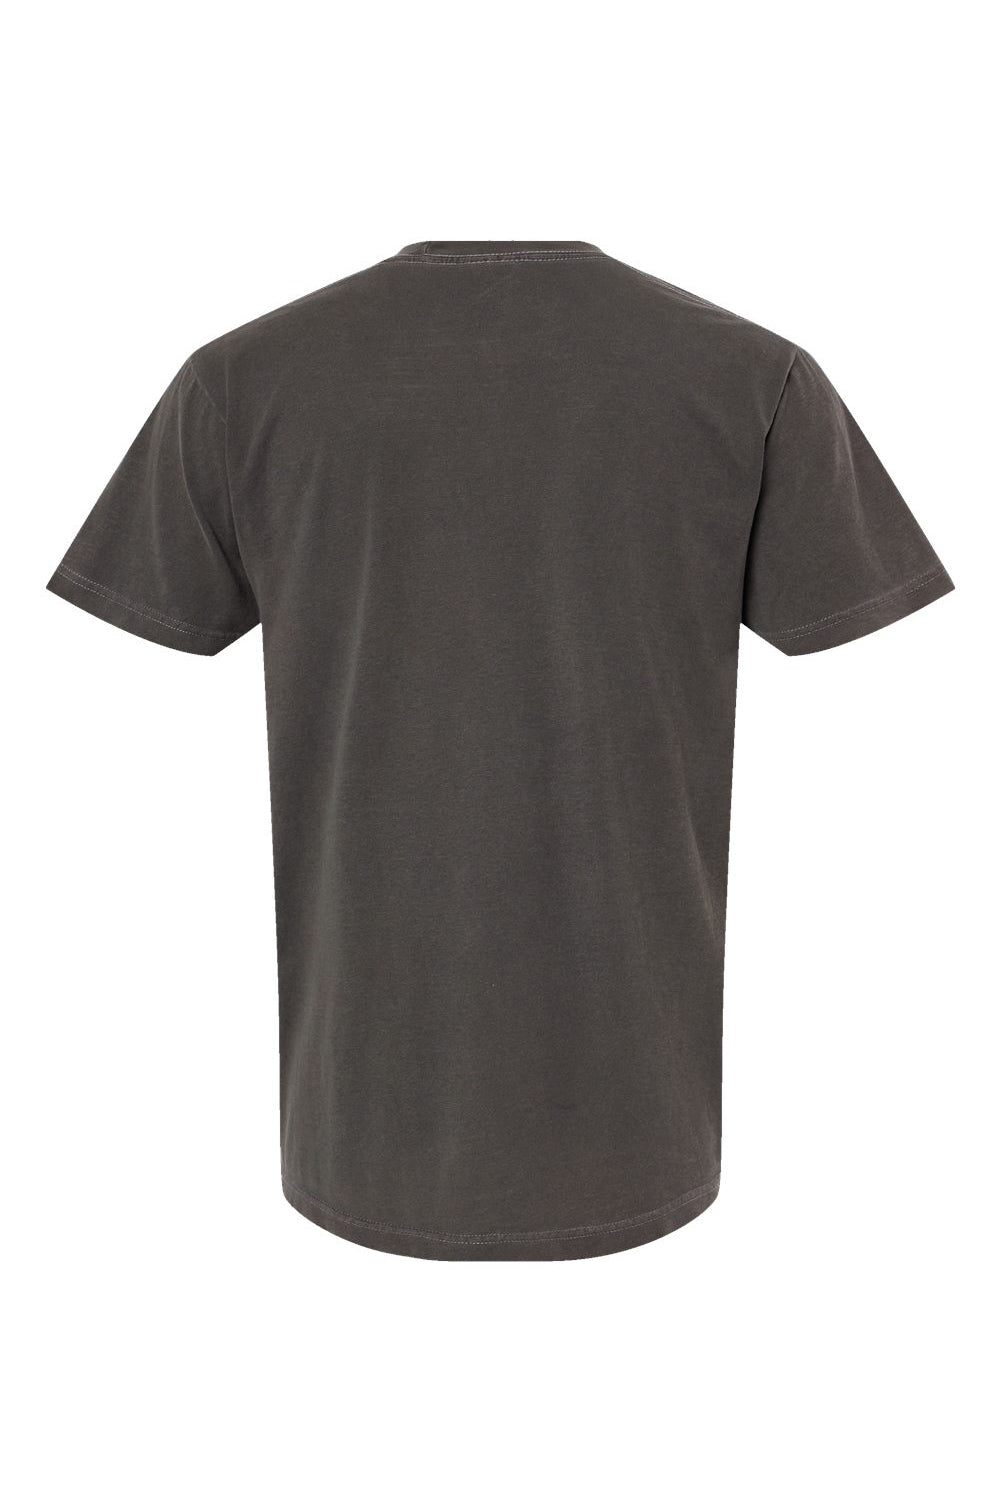 M&O 6500M Mens Vintage Garment Dyed Short Sleeve Crewneck T-Shirt Charcoal Grey Flat Back